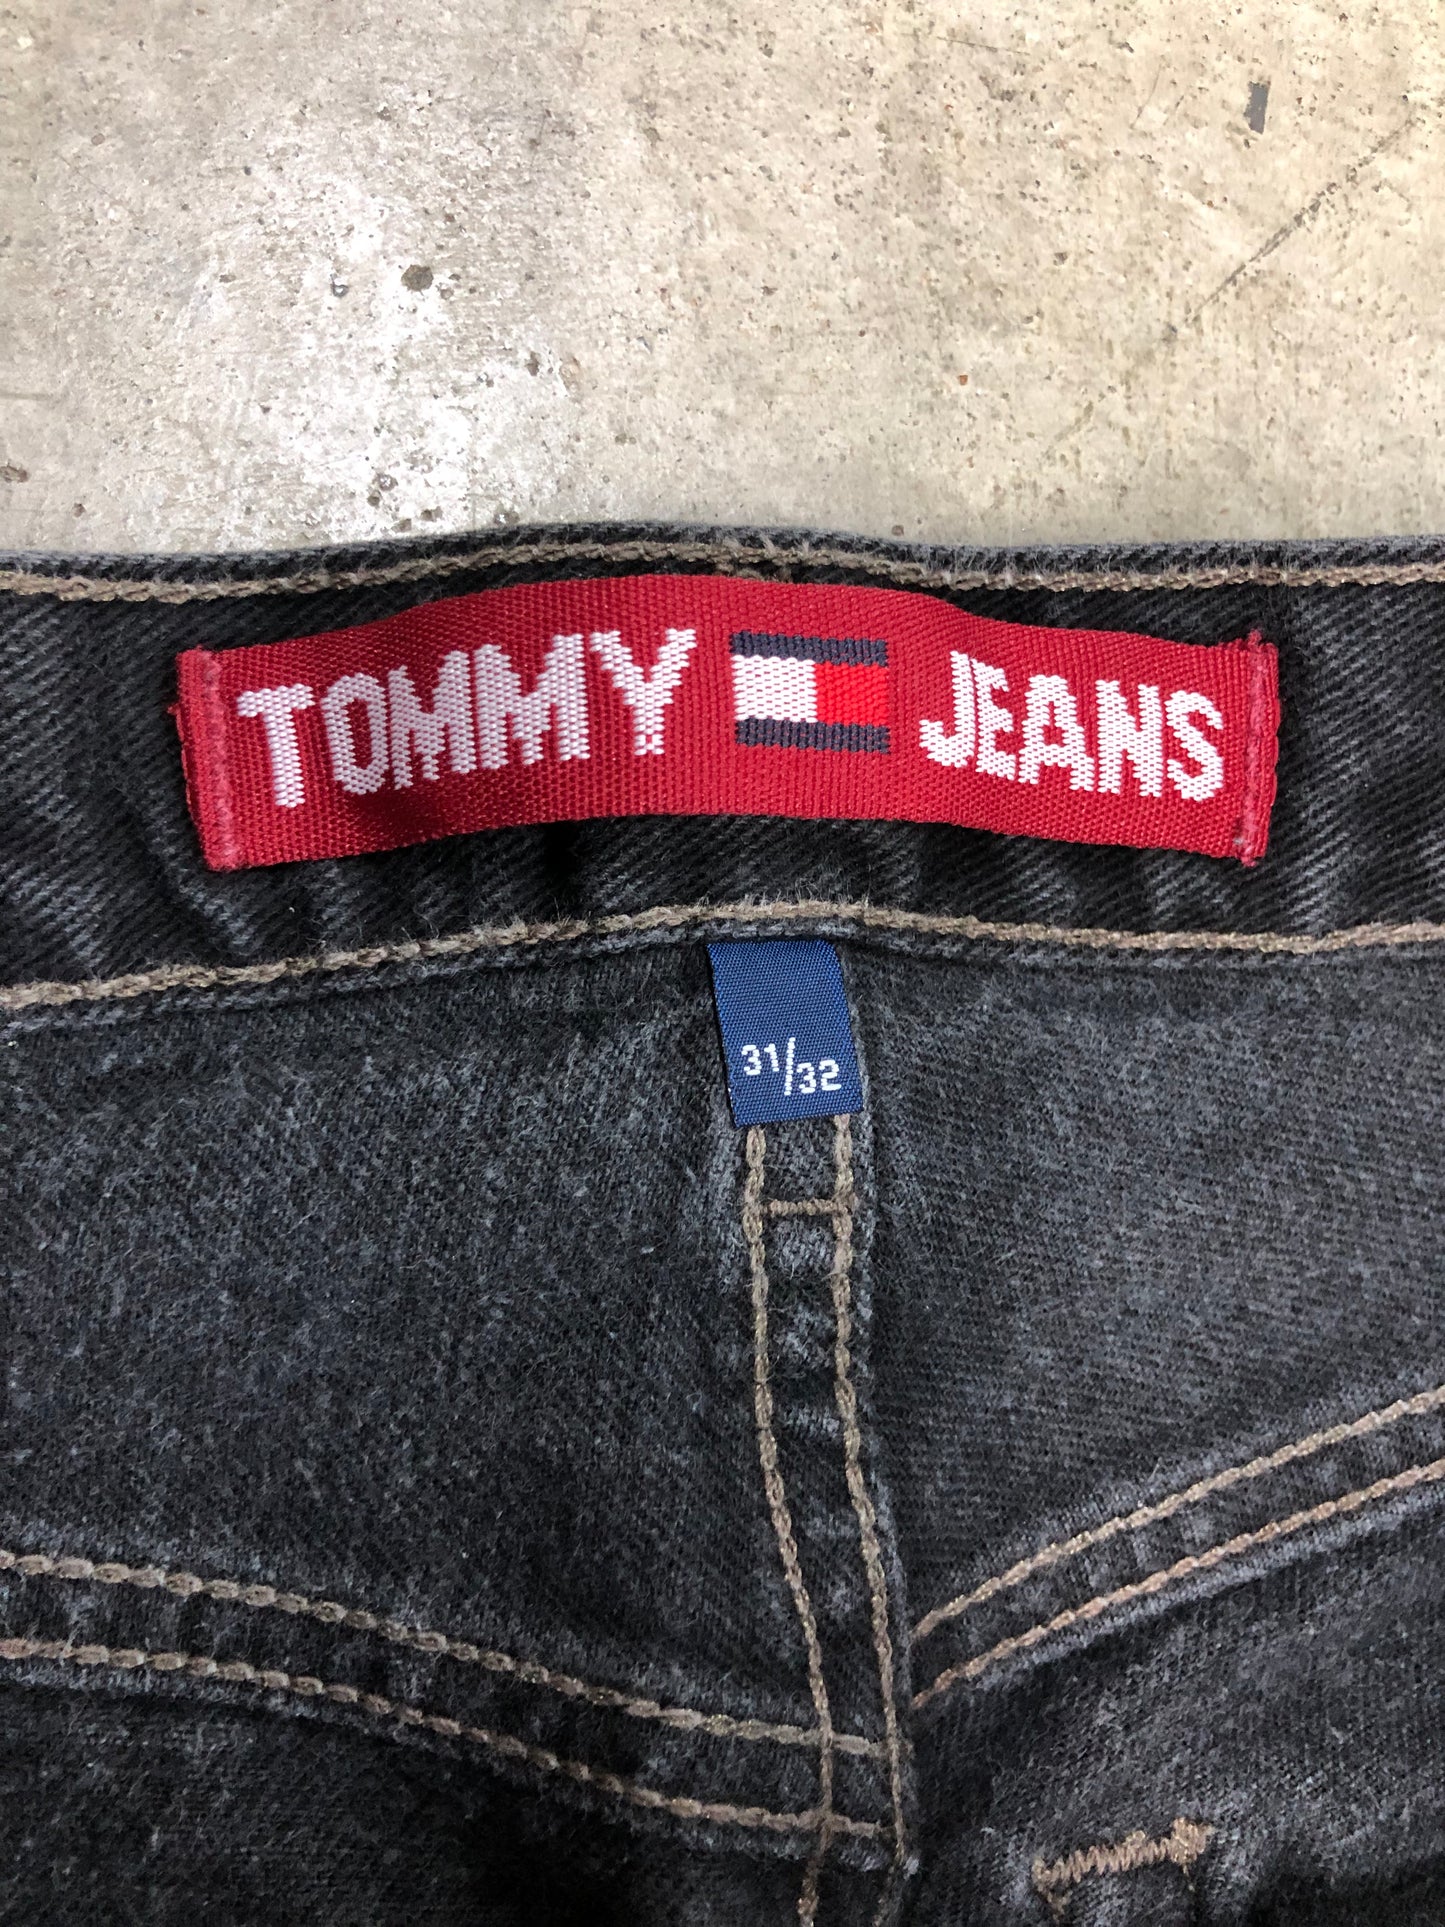 Load image into Gallery viewer, VTG Tommy Hilfiger Cropped Black Denim Jeans Sz 31x25
